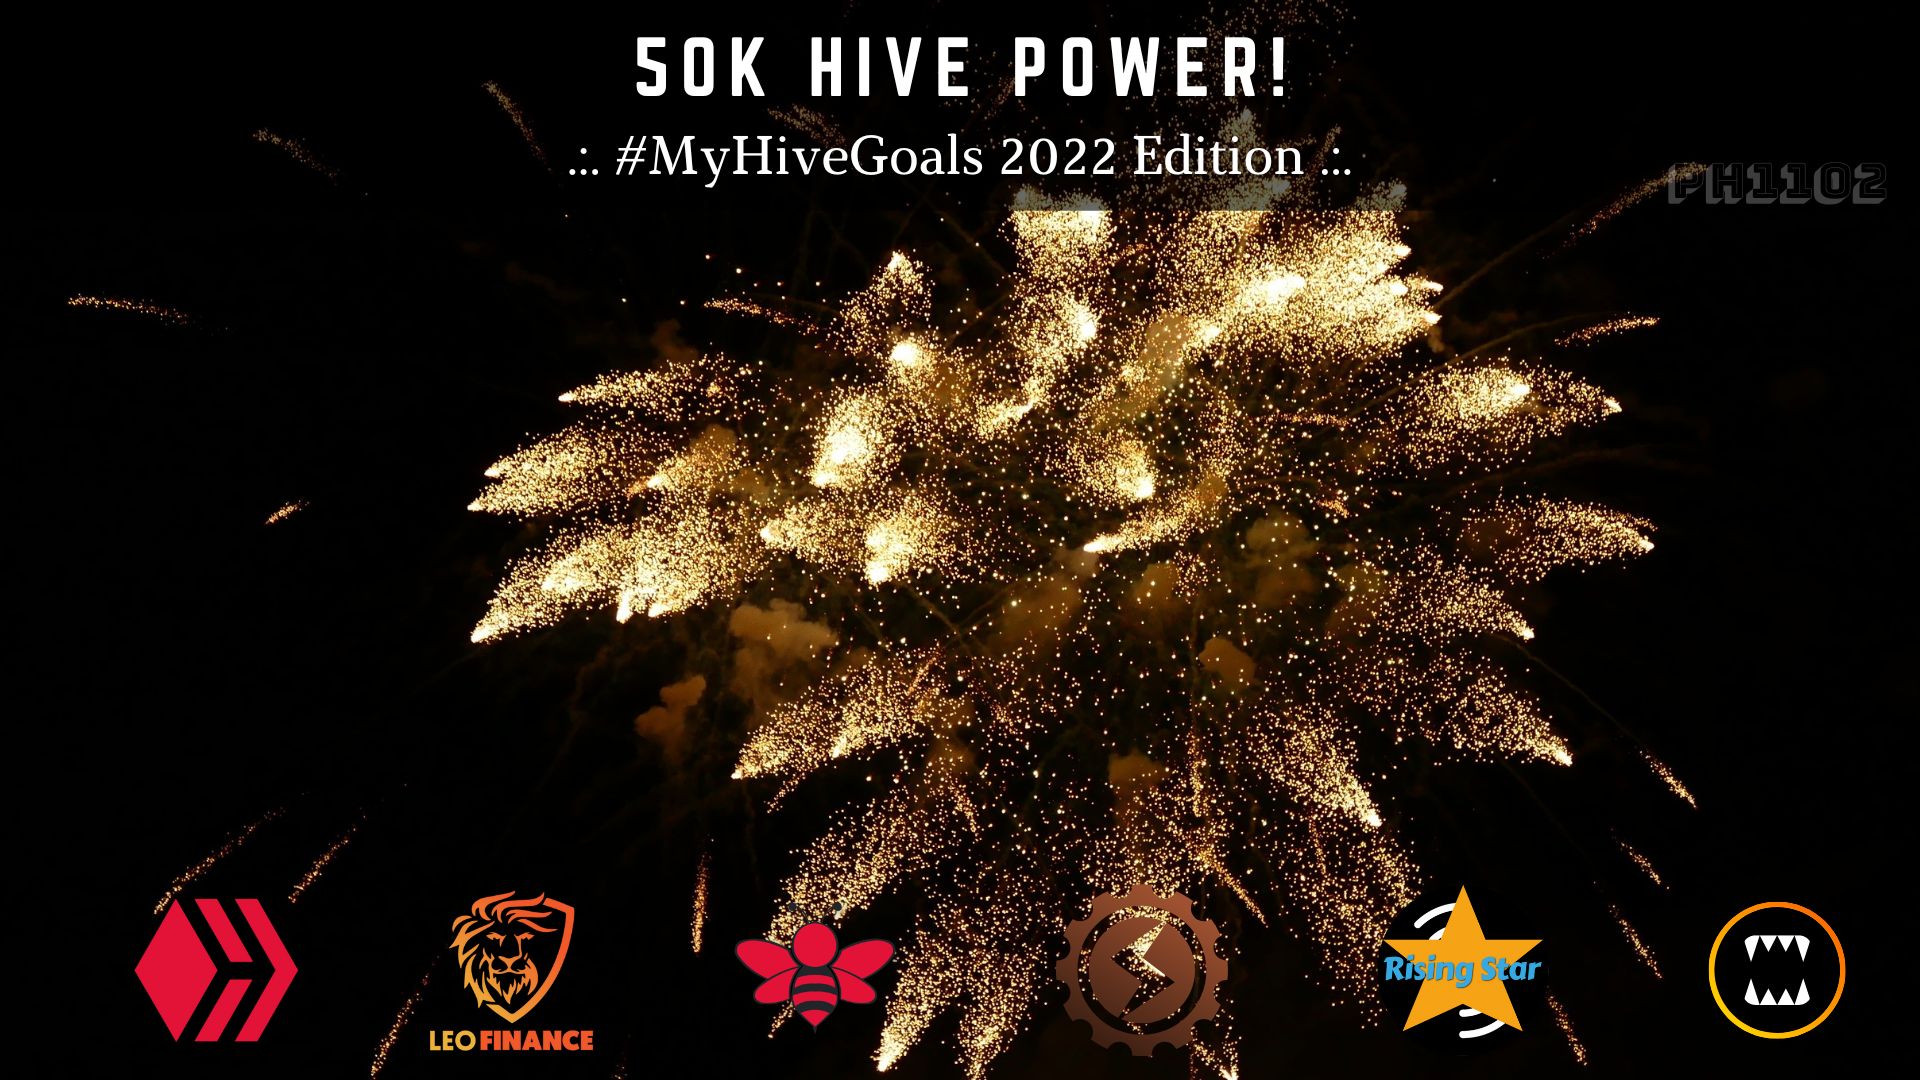 @ph1102/50k-hive-power-myhivegoals-2022